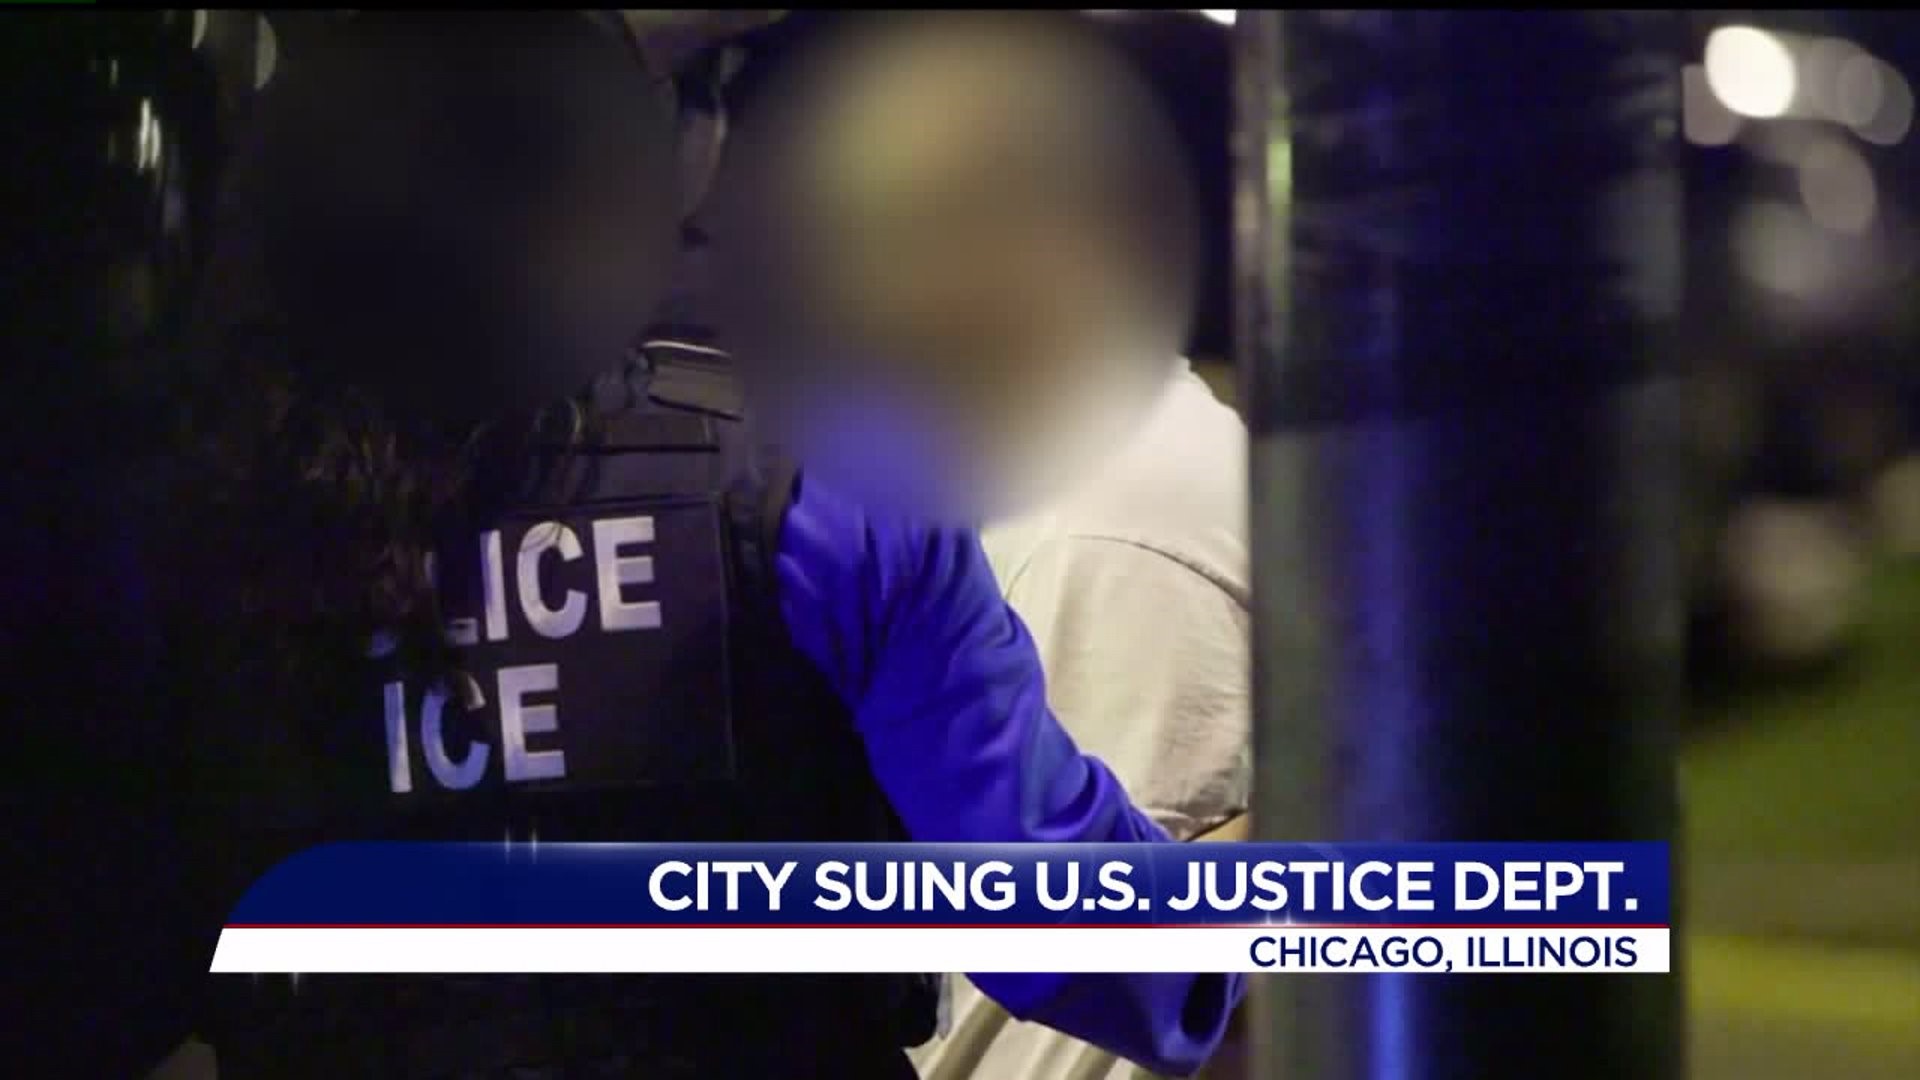 Chicago suing justice dept